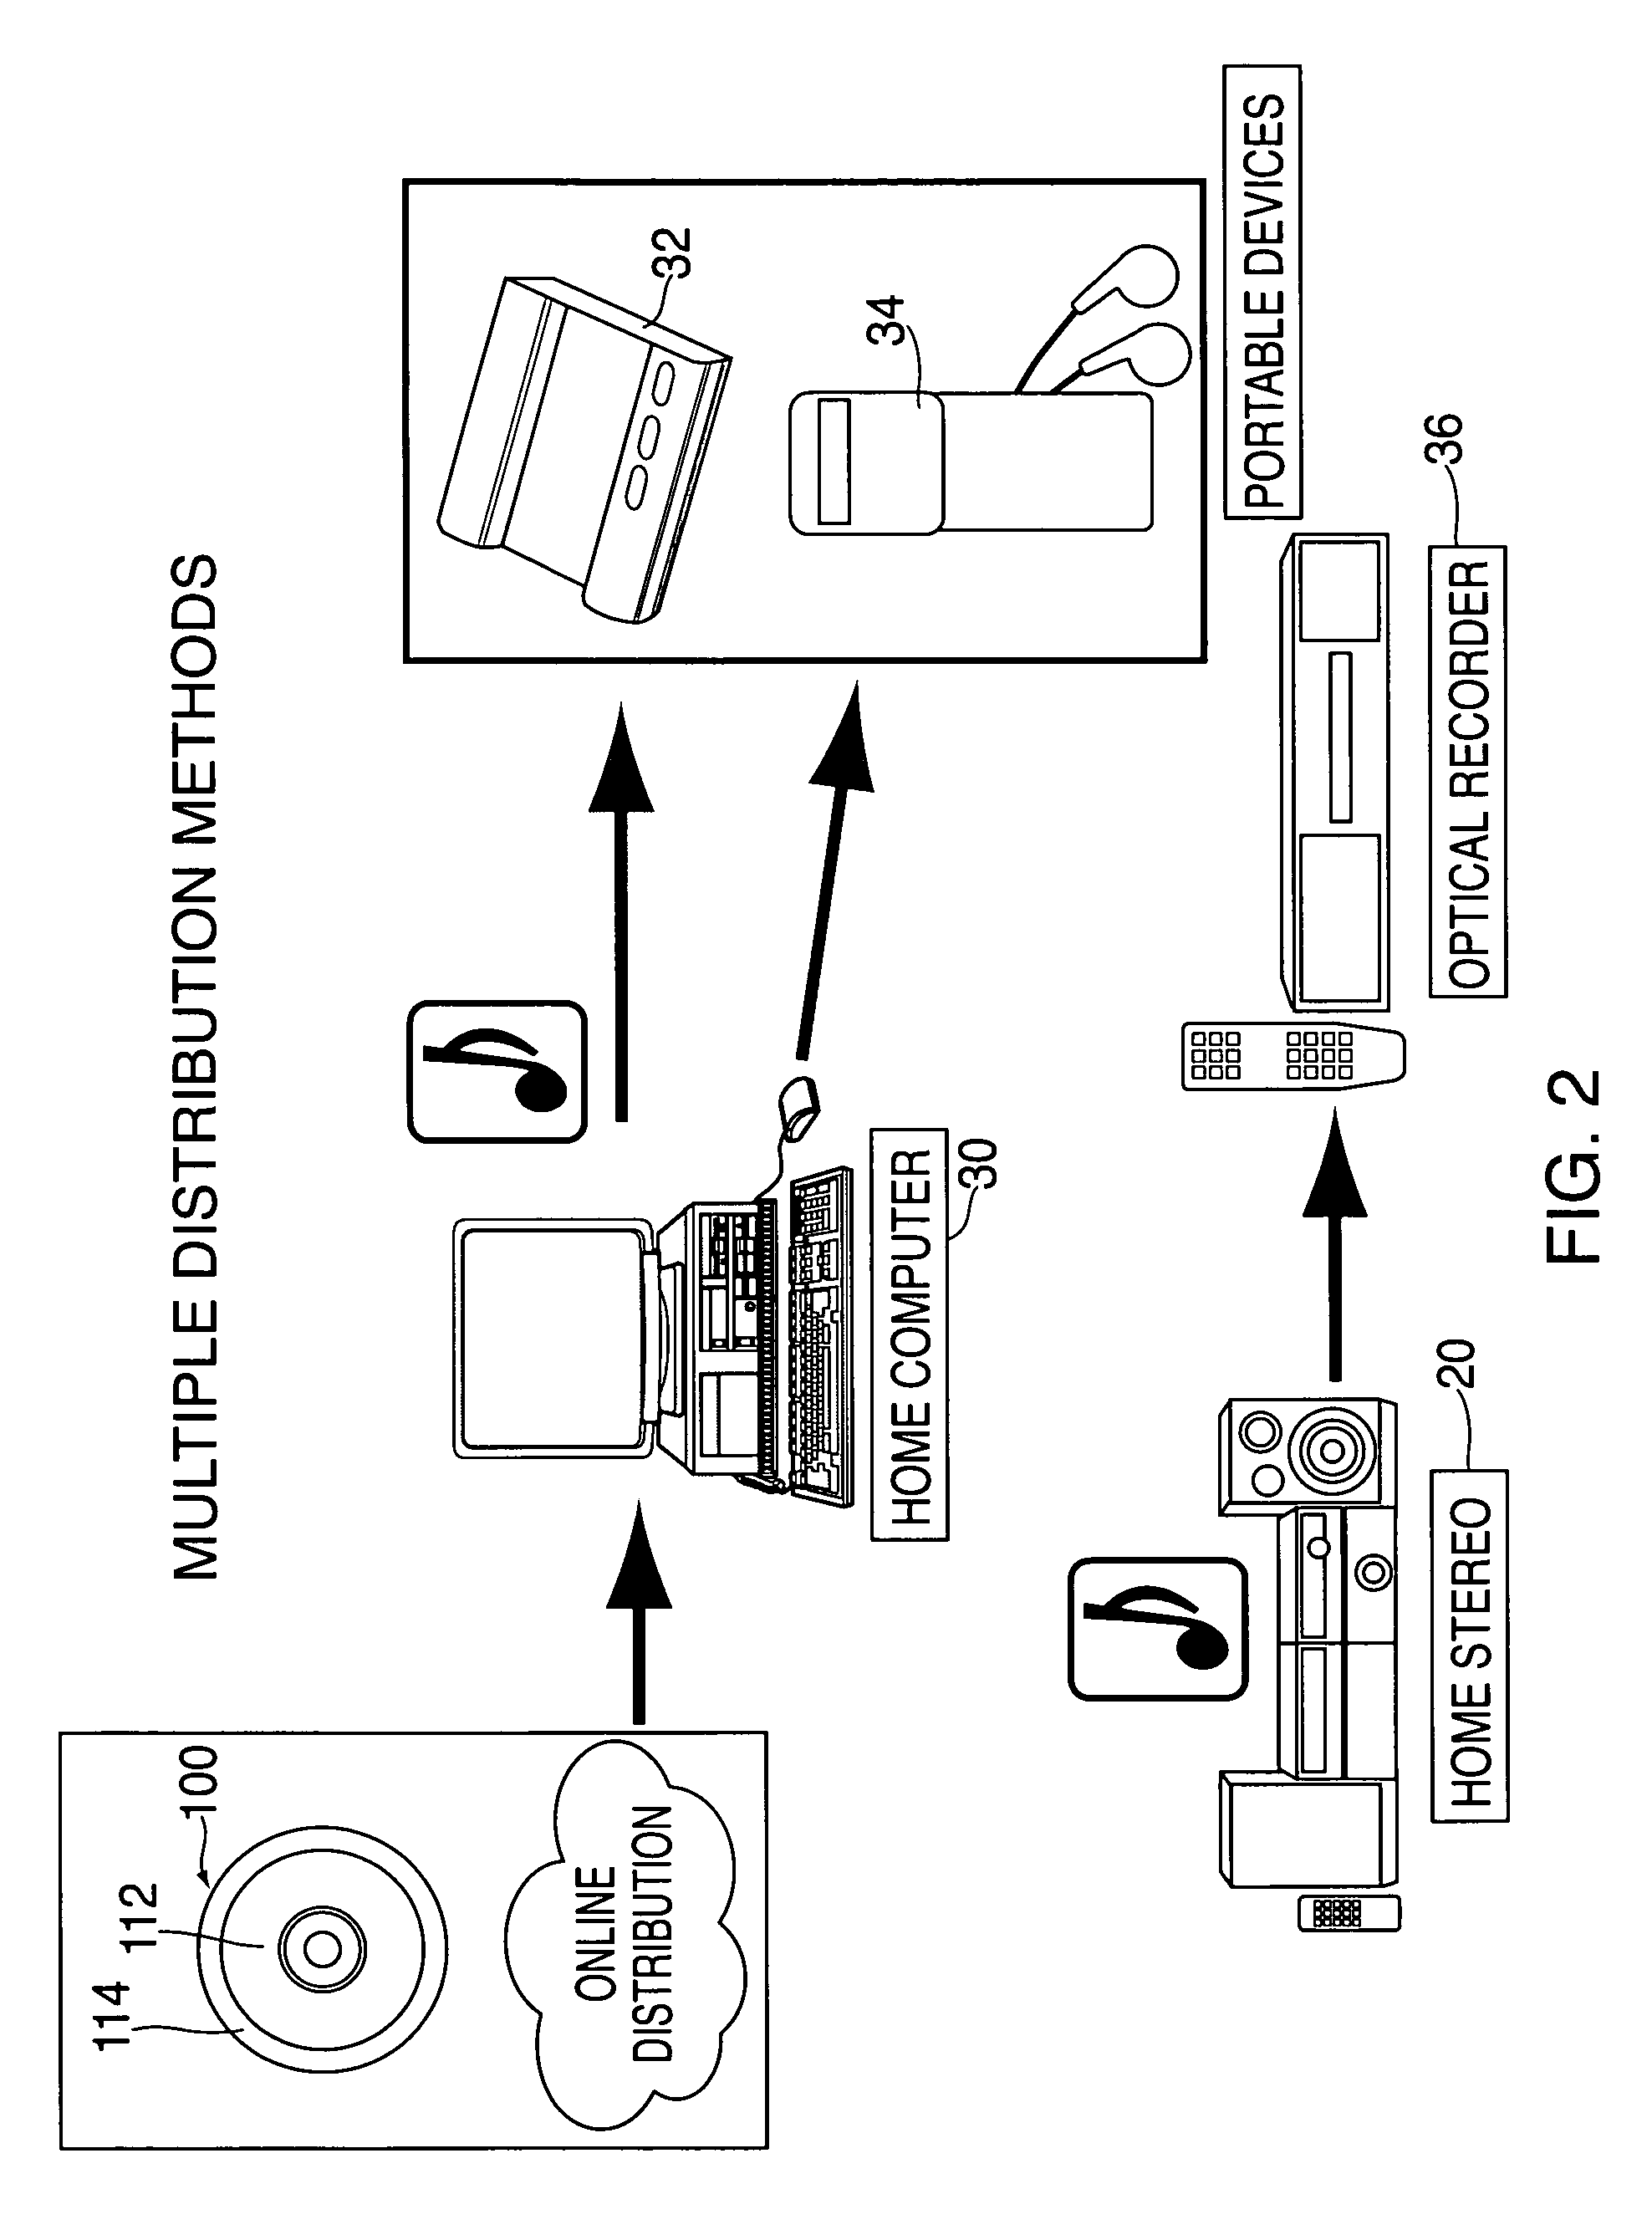 Method and apparatus for distributing multimedia programs